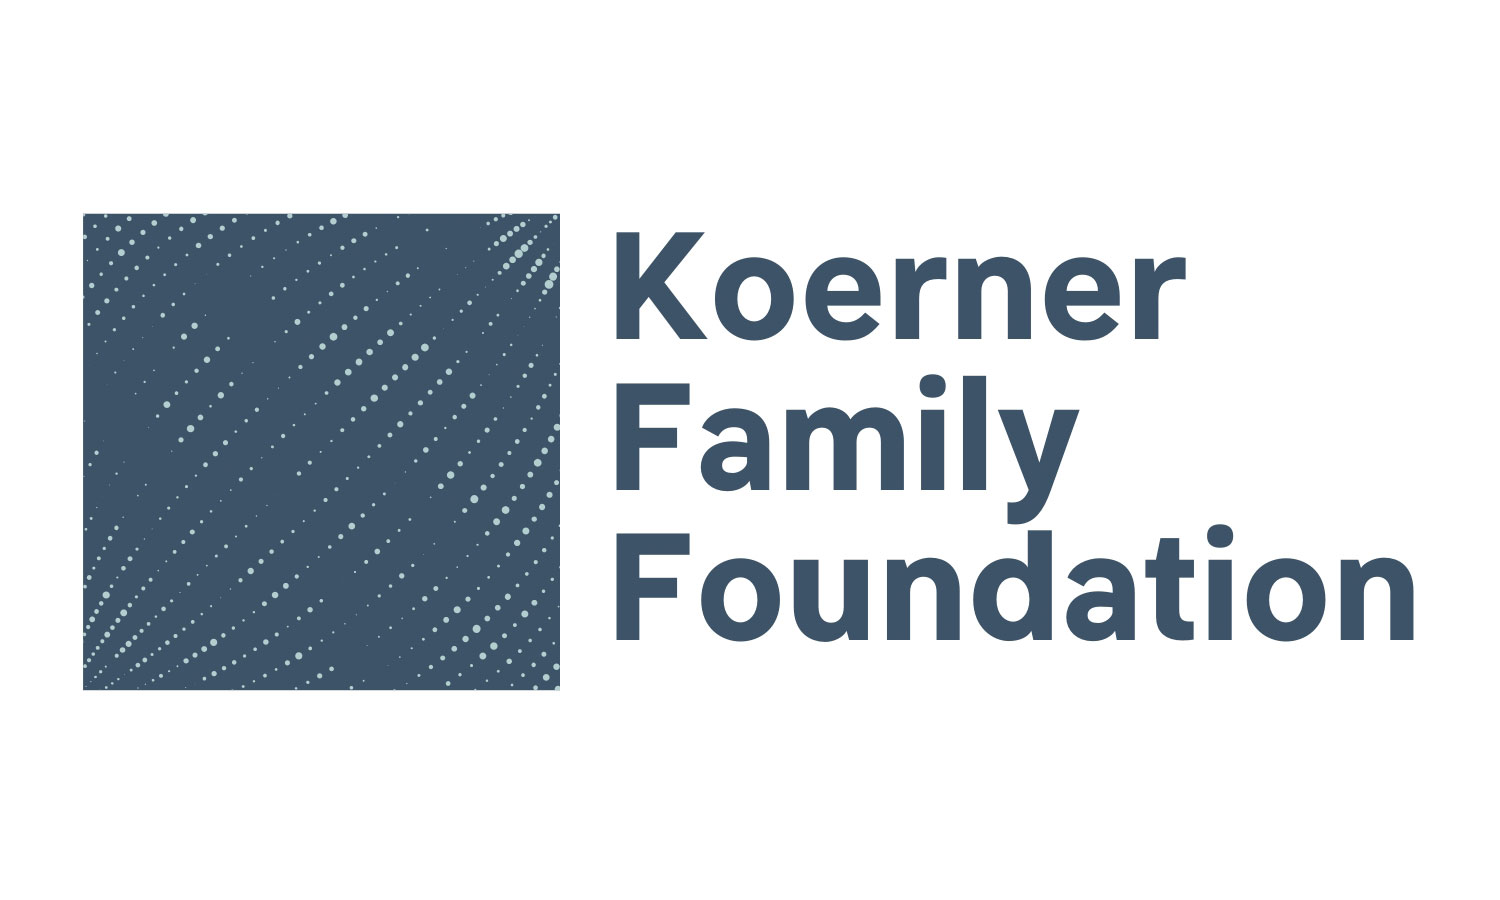 Koerner Family Foundation awards